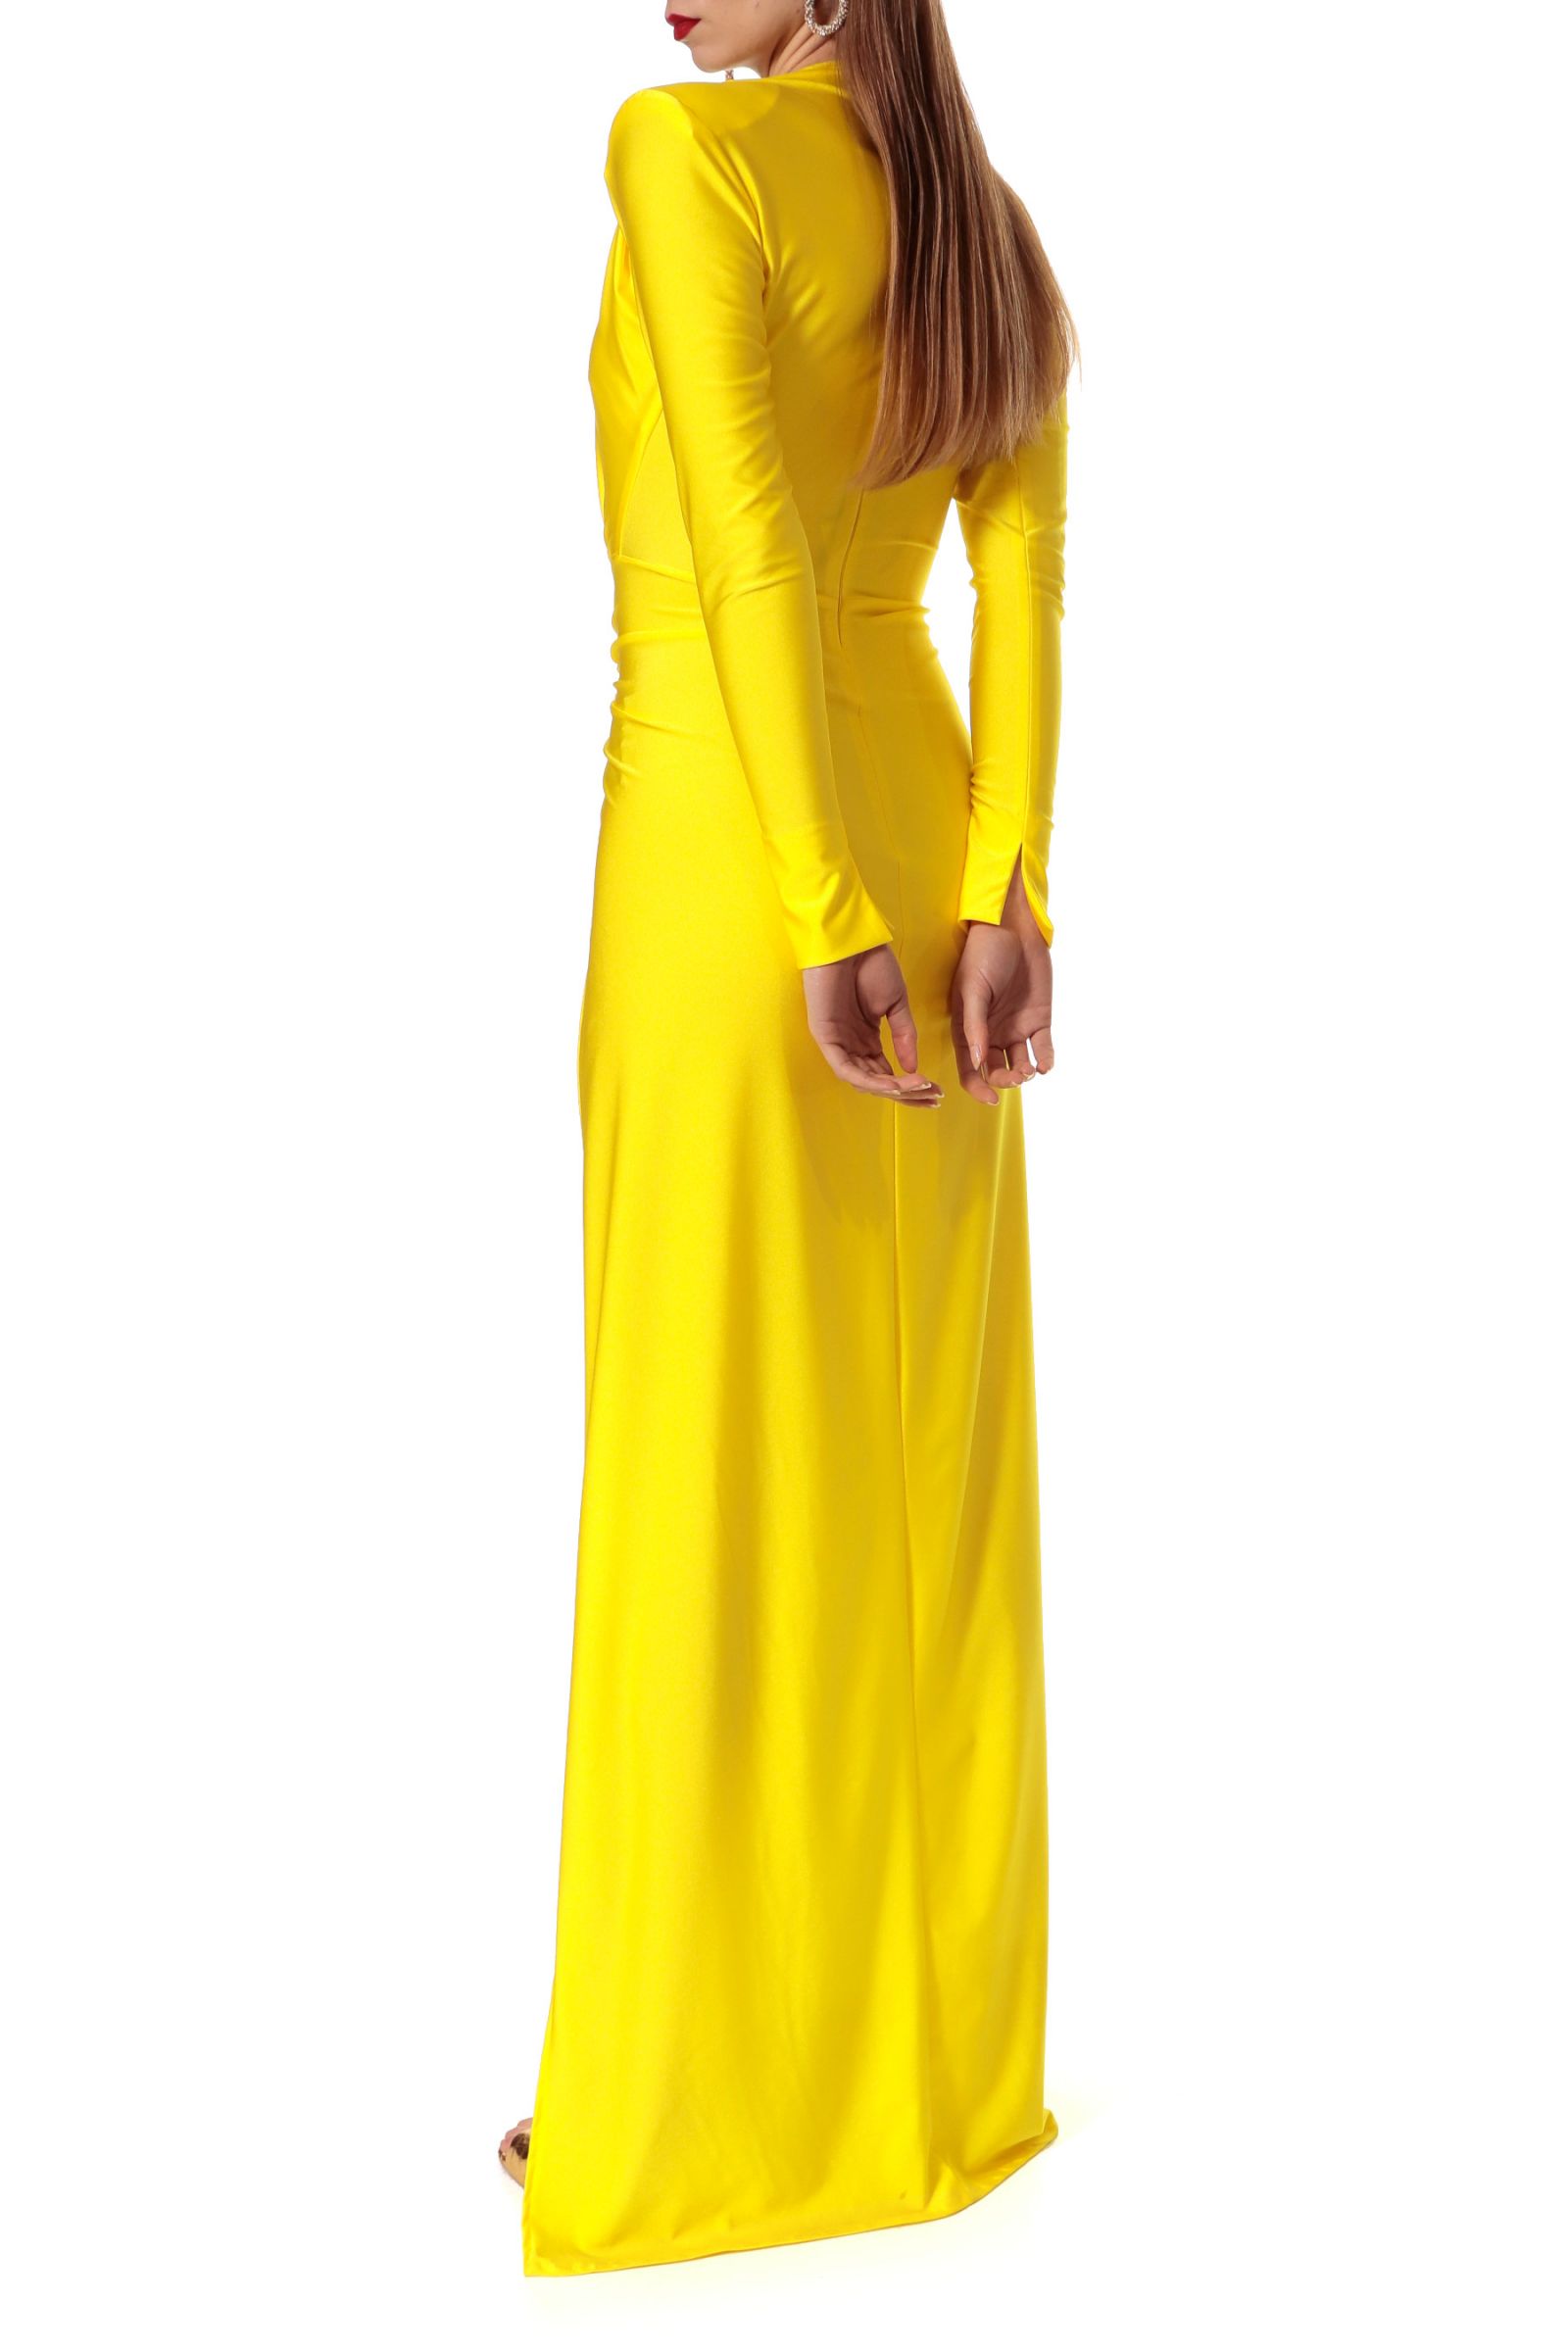 Adriana Super Yellow Dress, Aggi